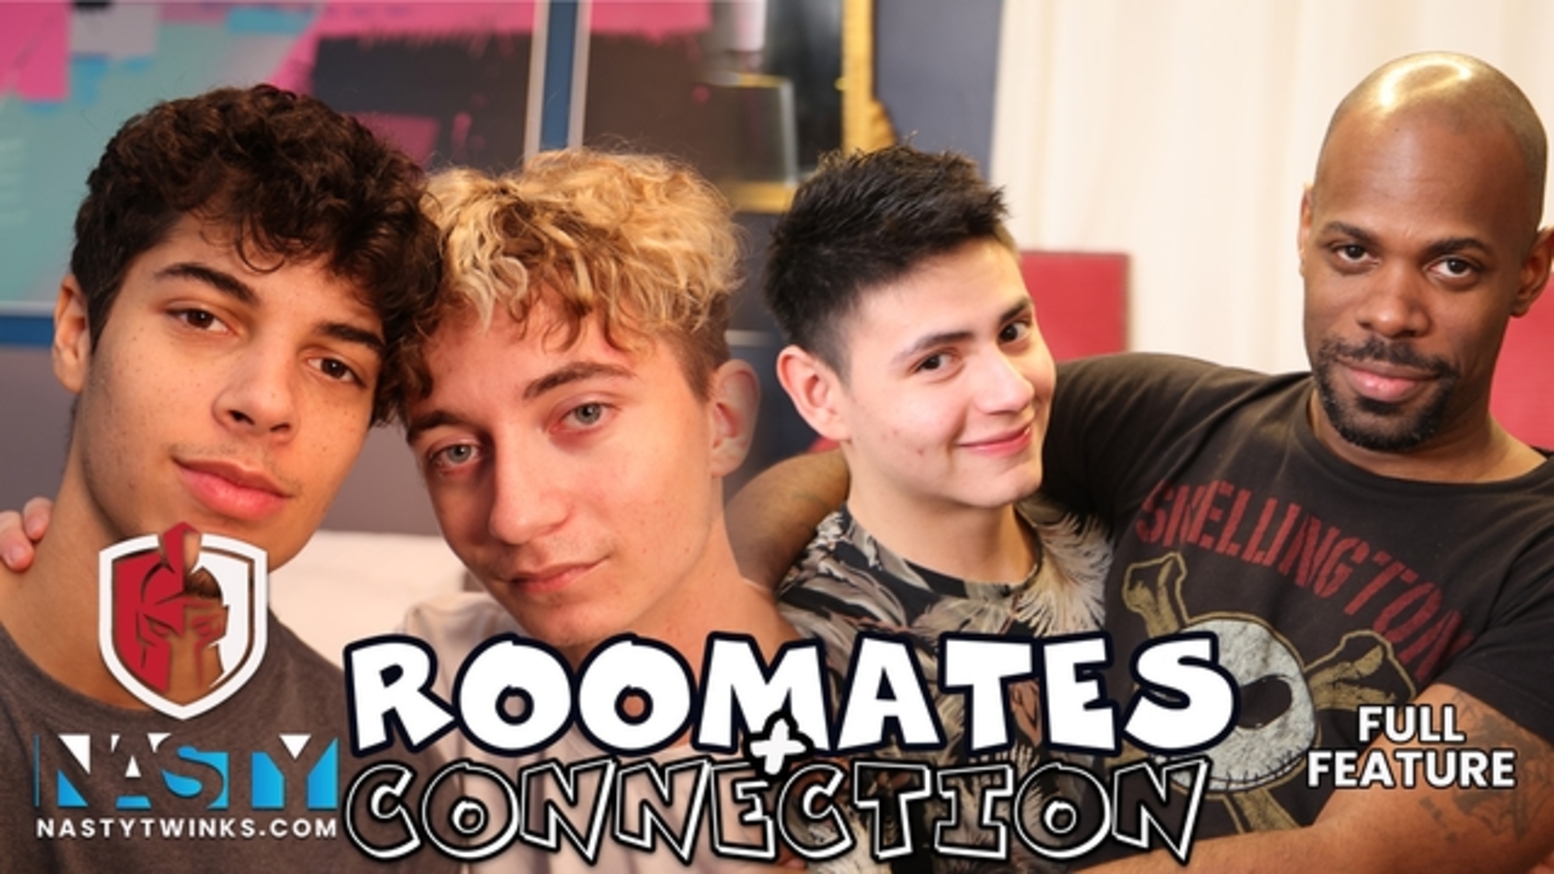 Roommates Full Feature